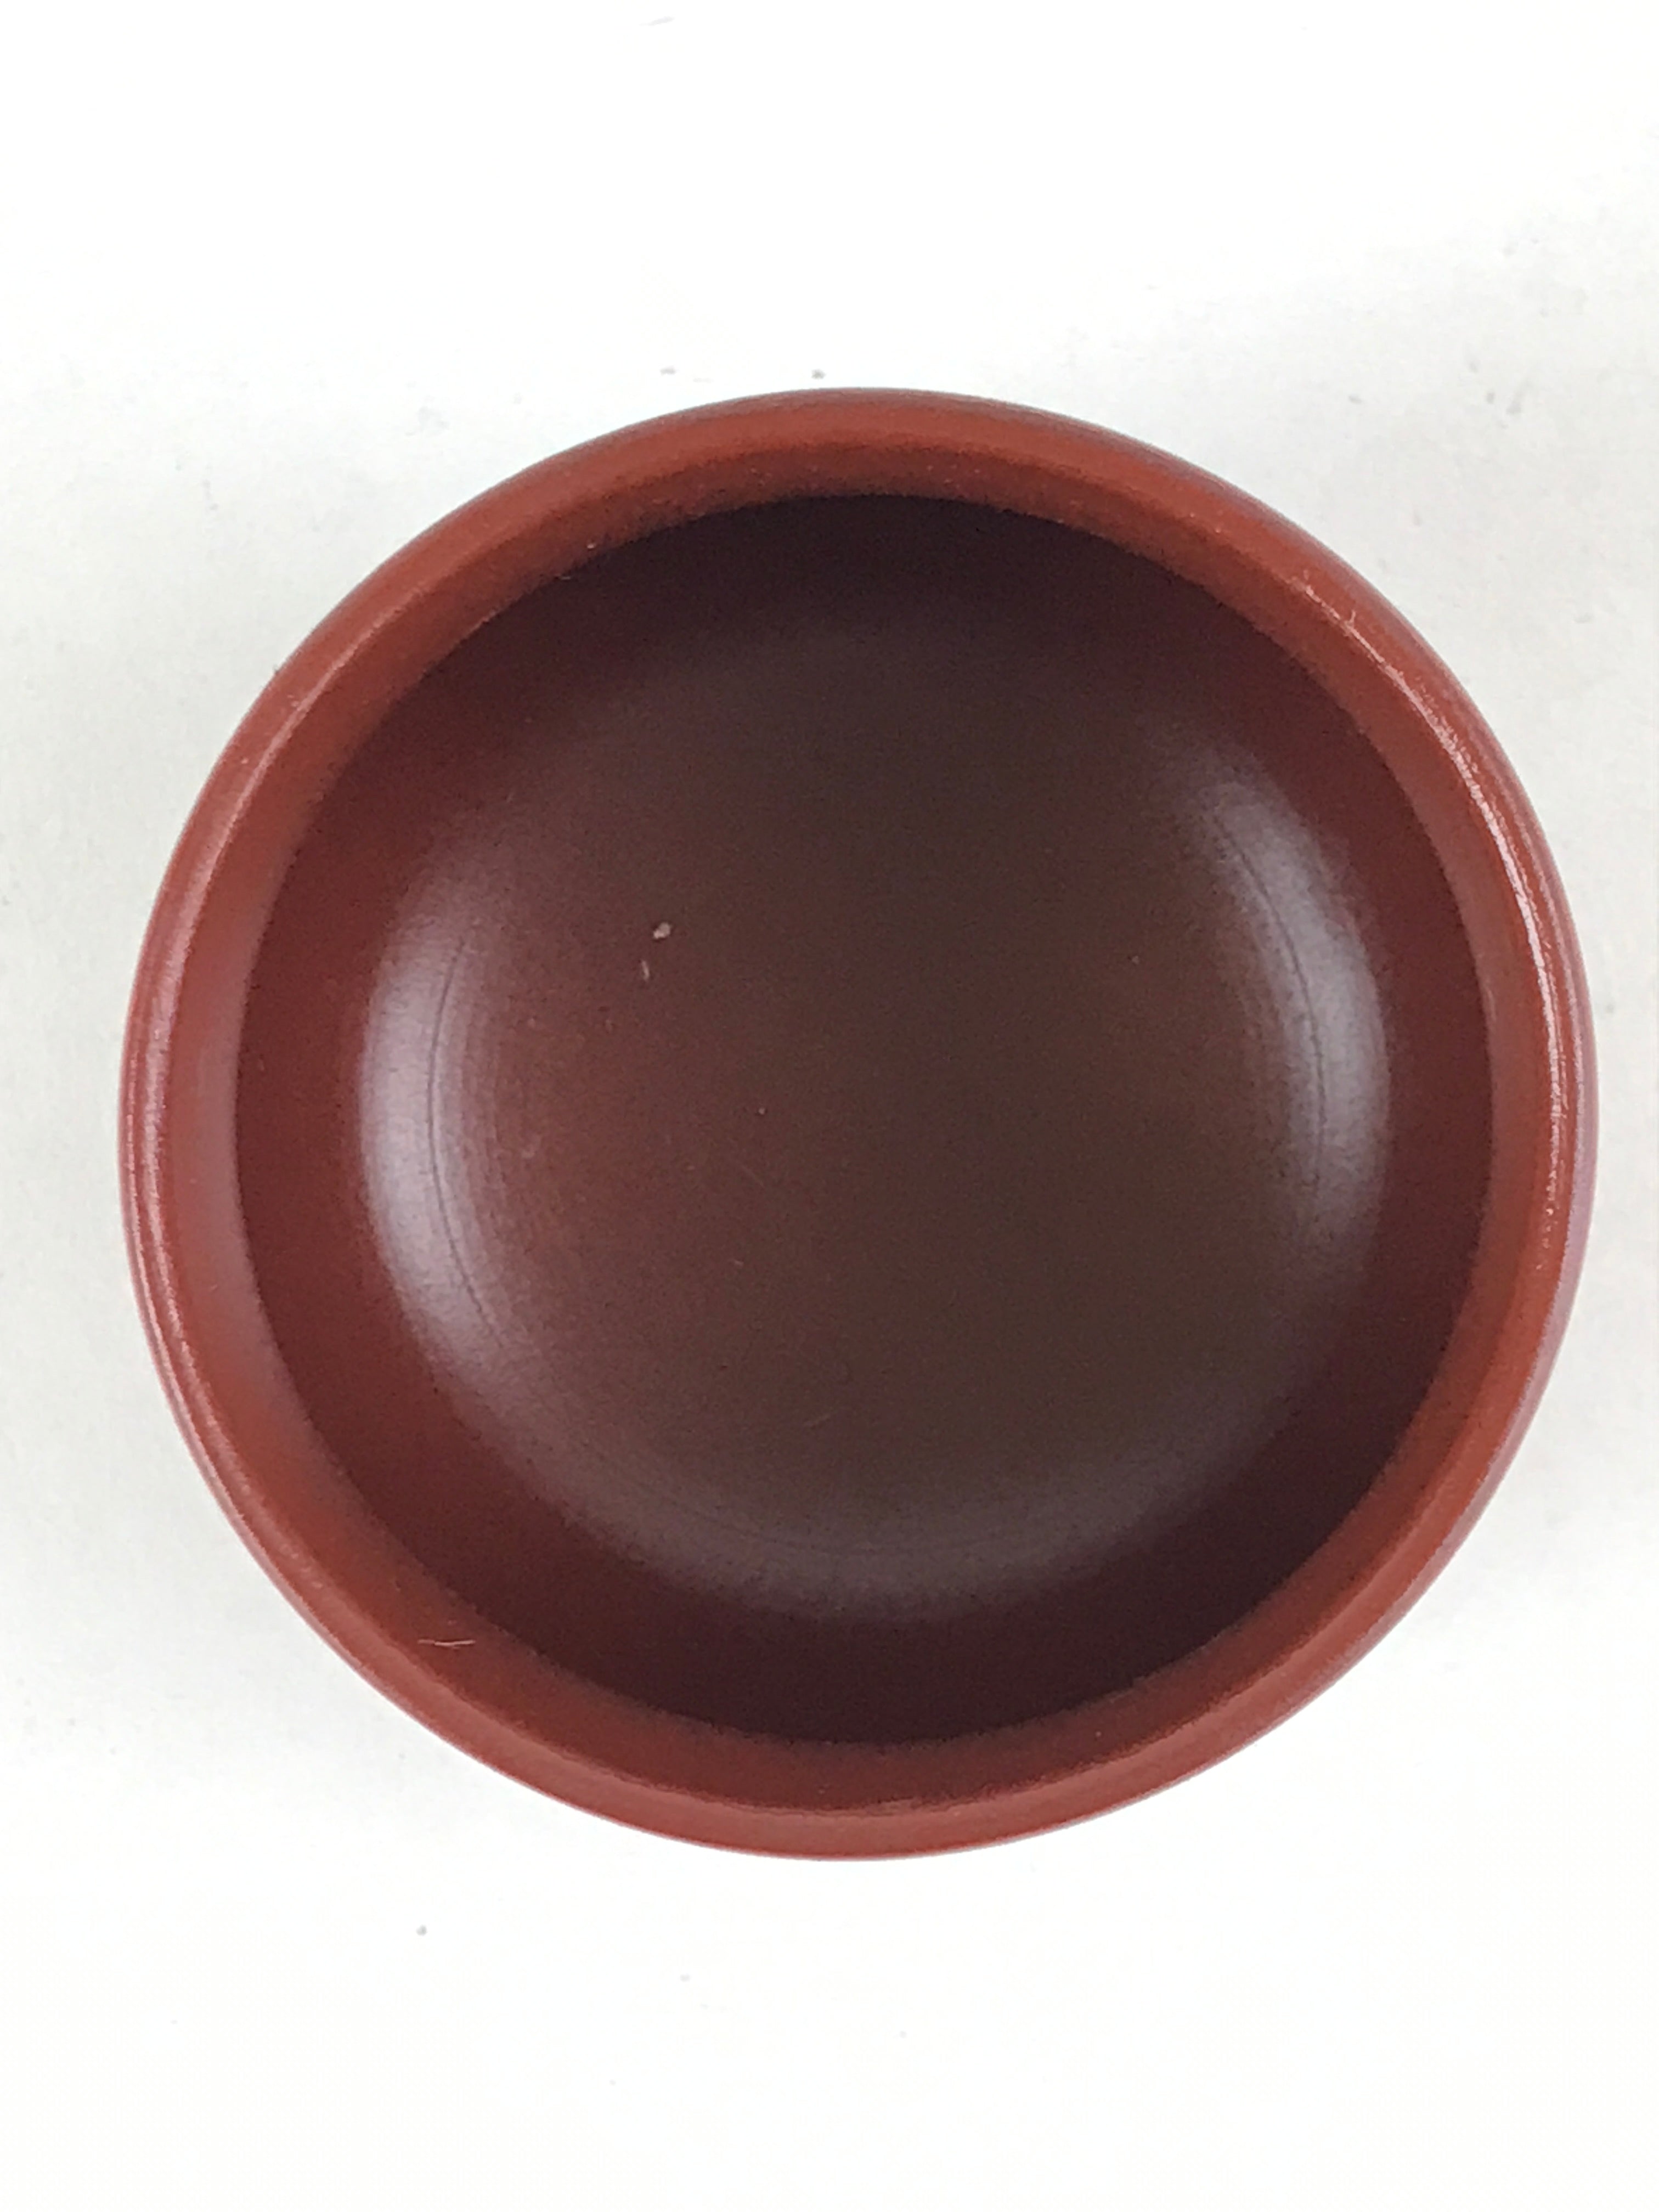 Japanese Tokoname Ware Ceramic Teacup Vtg Pottery Yunomi Brown Lines TC379